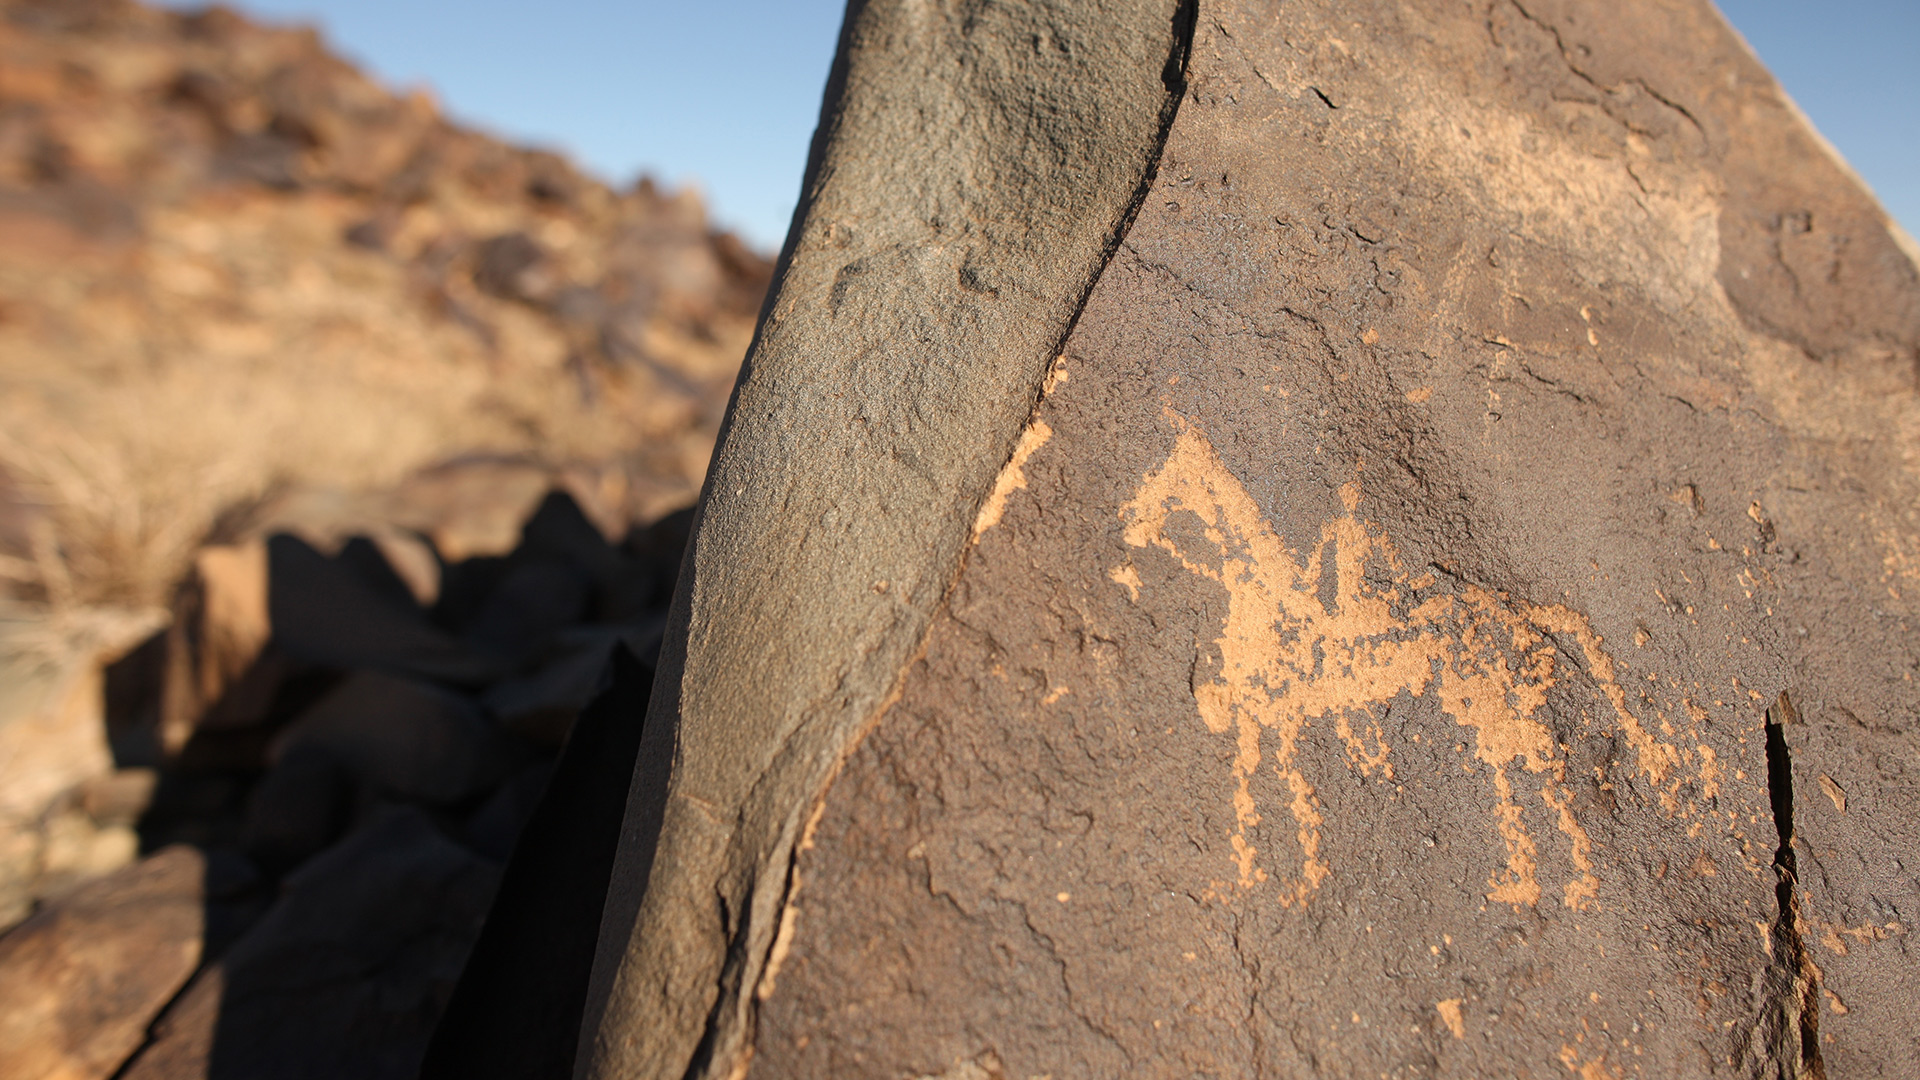 Ancient petroglyphs from Javkhlant rock